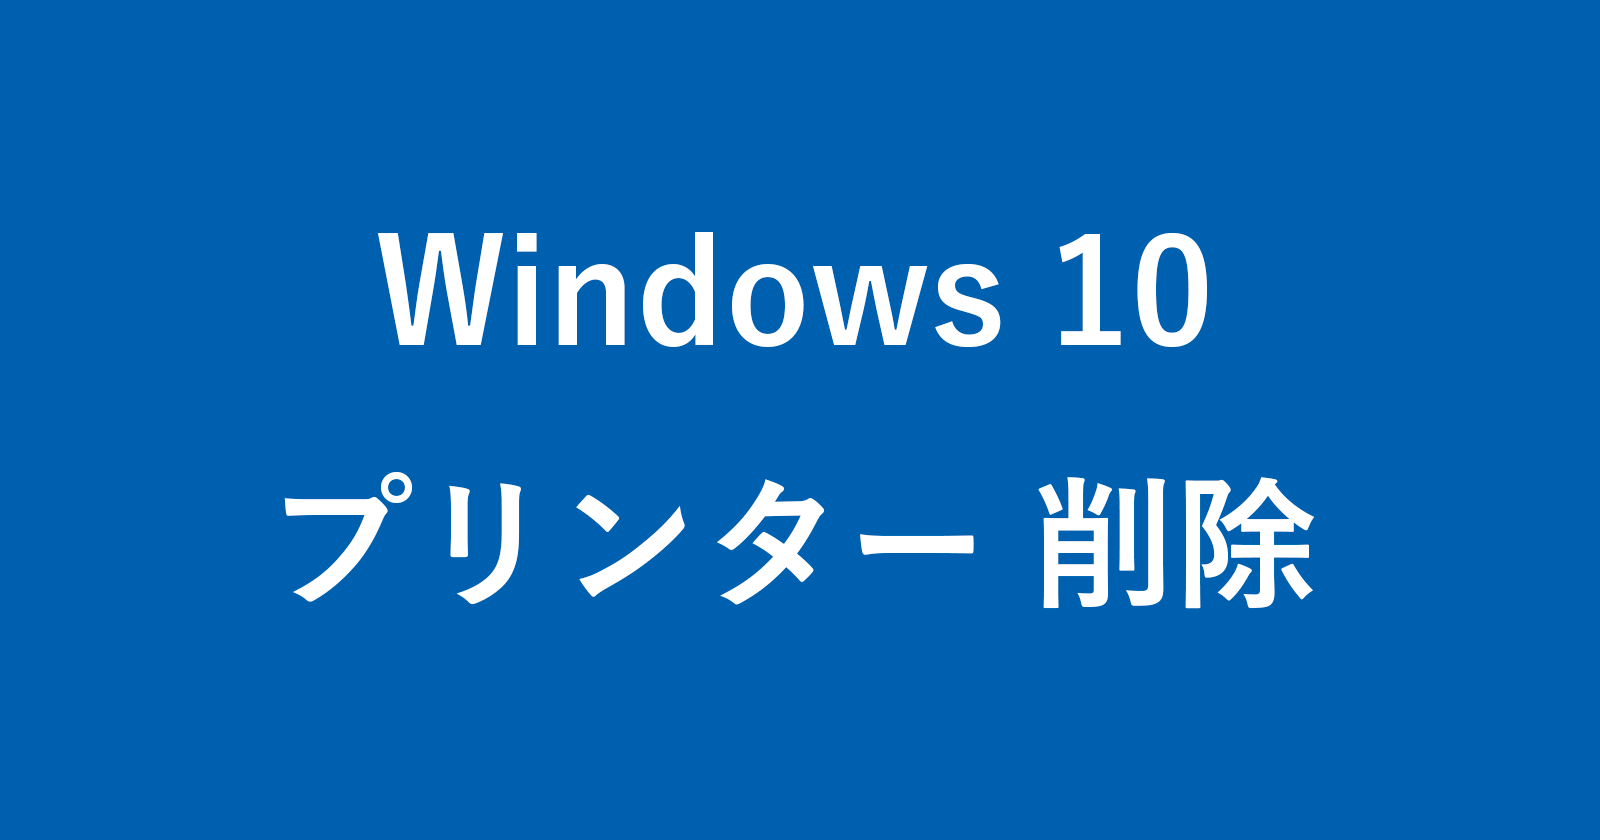 windows 10 delete printer